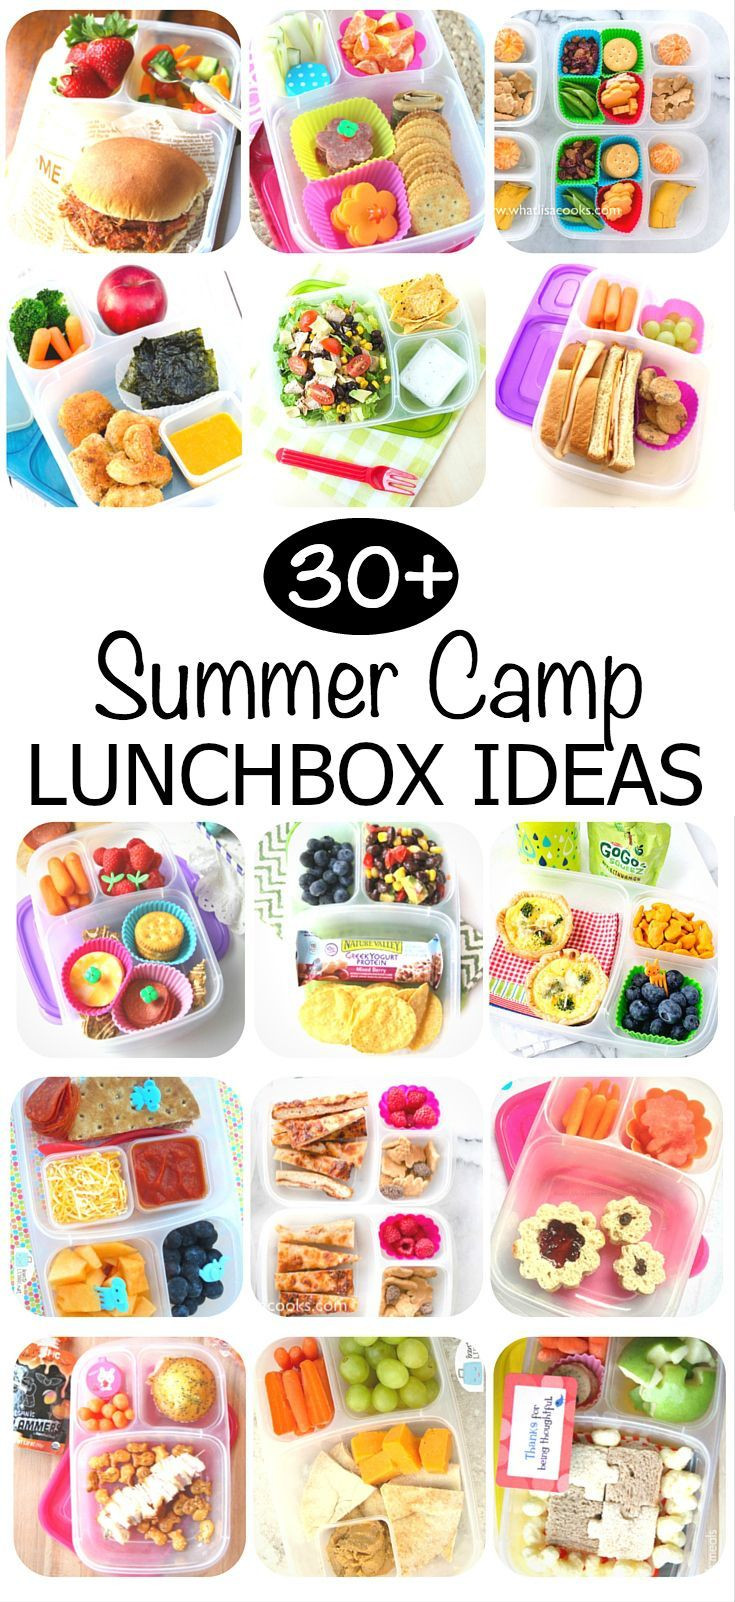 Summer Camp Lunch Ideas
 Over 30 Summer Camp Lunchbox Ideas